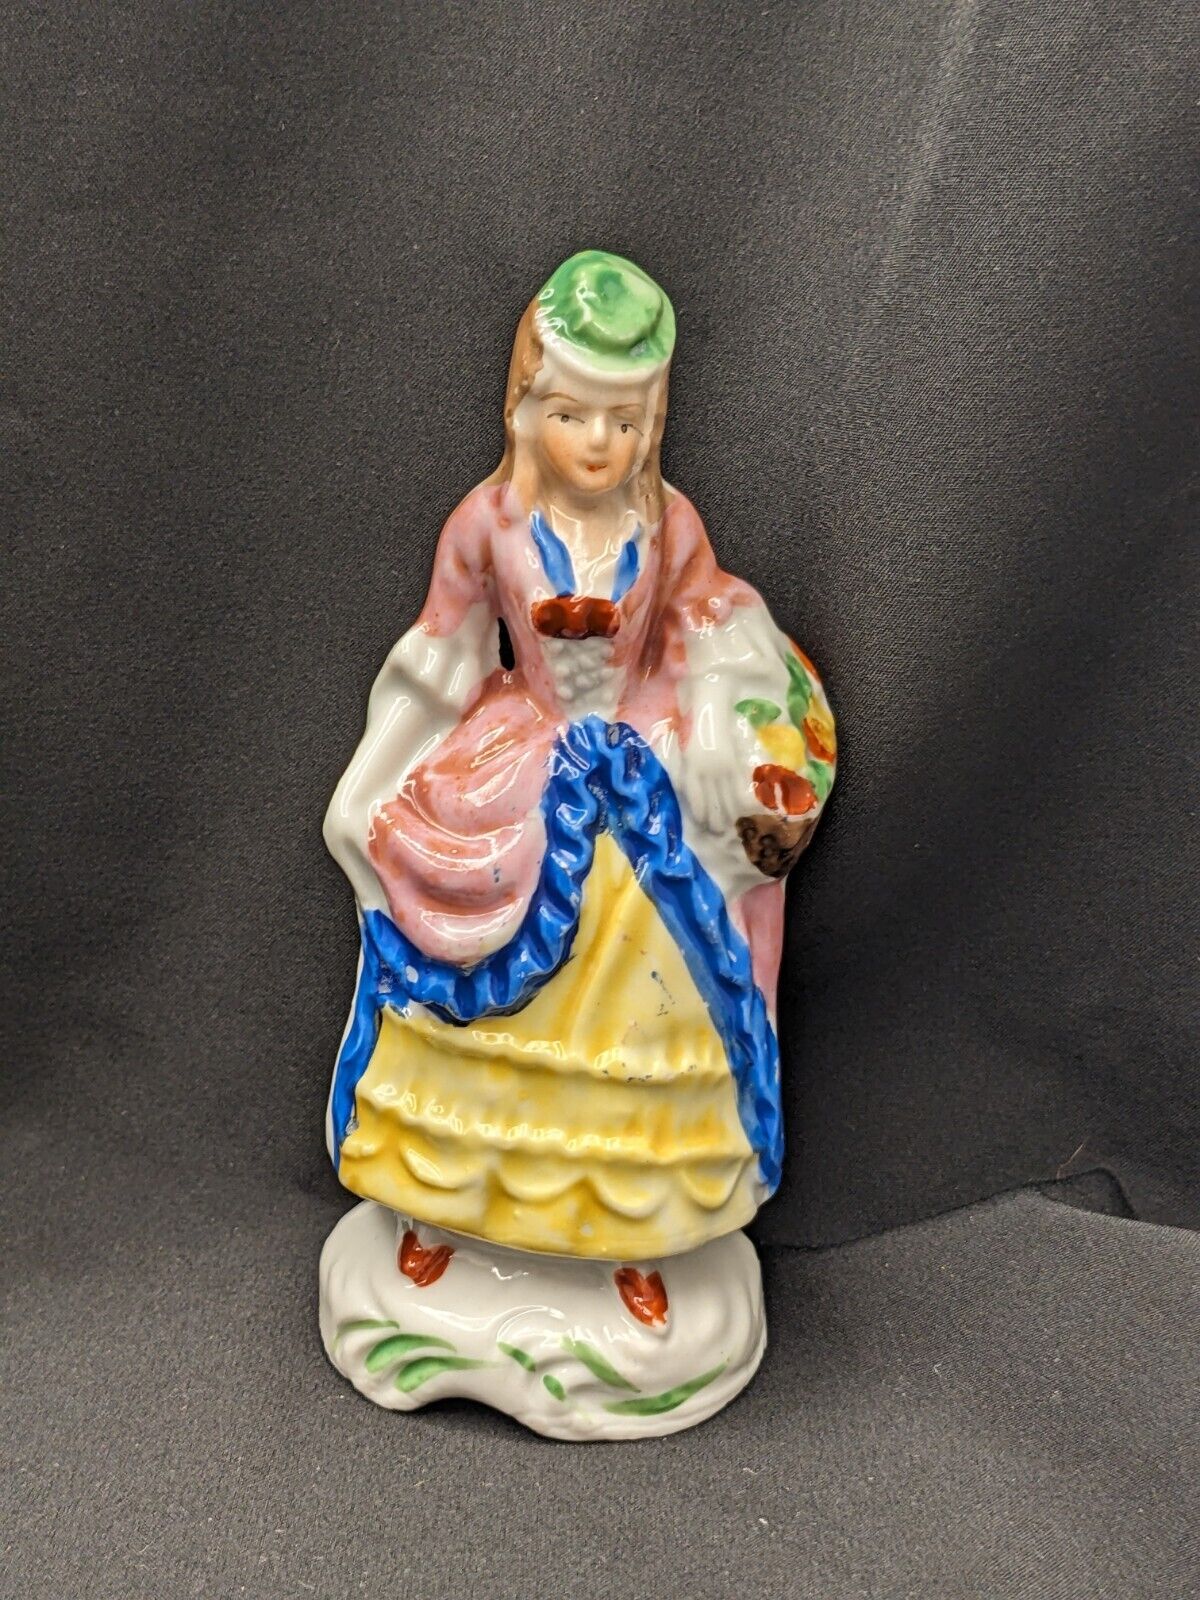 Vintage Woman with Fruit Basket Ceramic Figurine Made in Japan